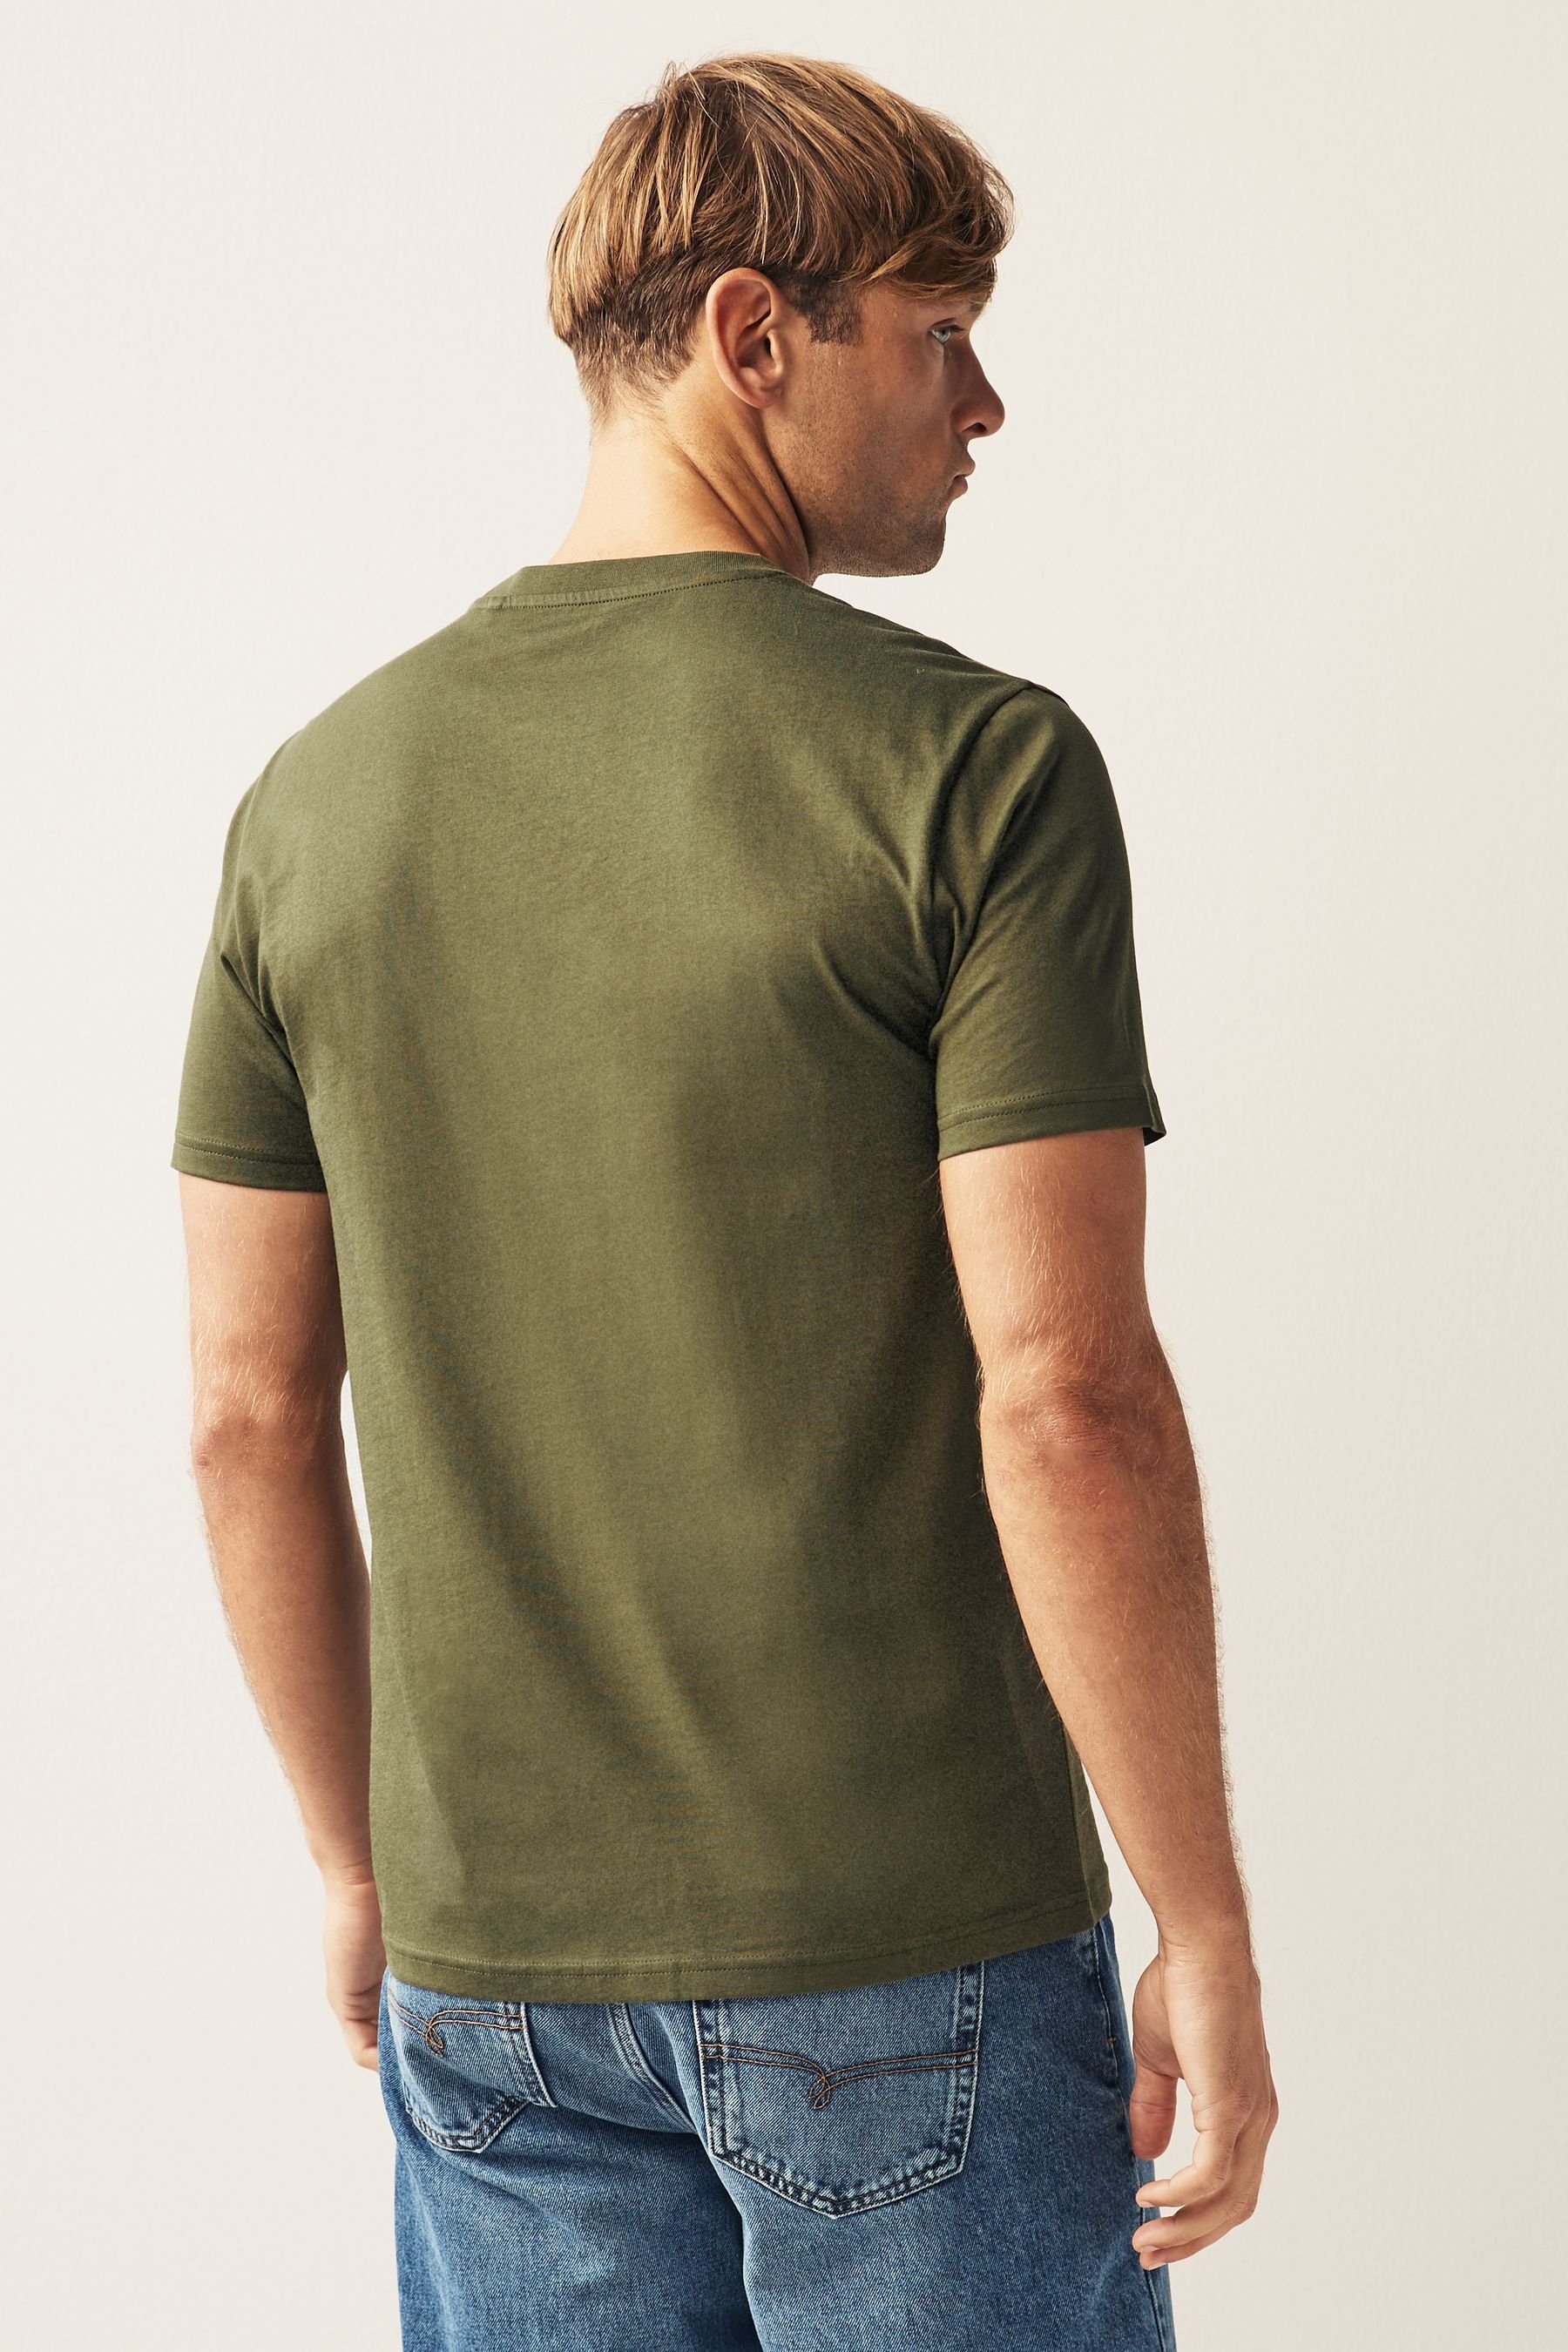 T-Shirt Next Navy/Brown/Rust/Green (4-tlg) T-Shirts 4er-Pack